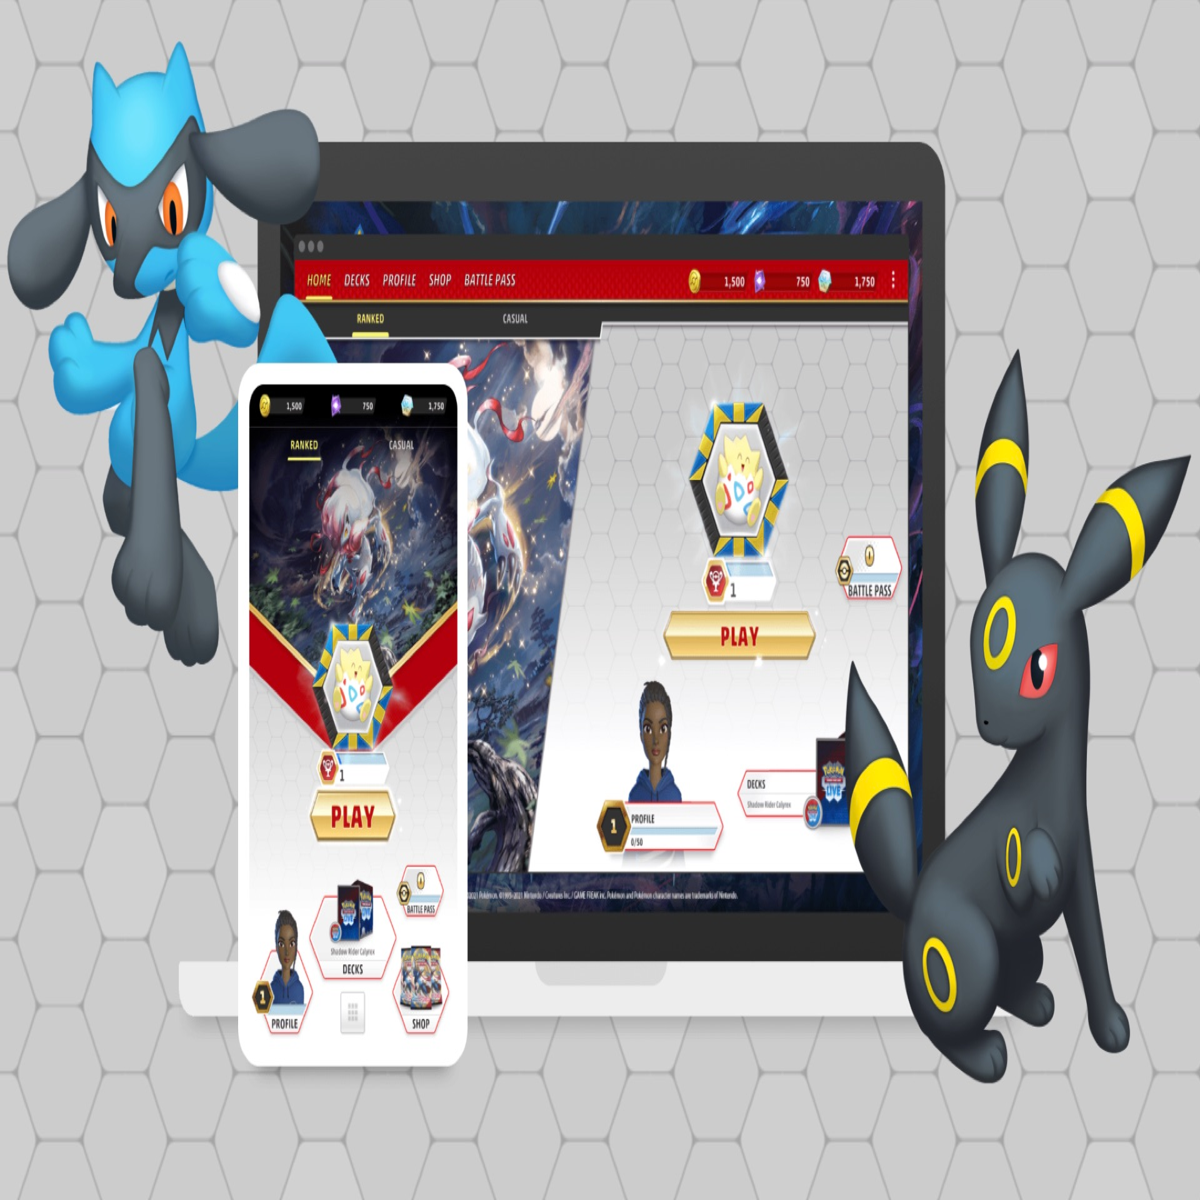 Pokémon TCG teases a new cross-platform digital application